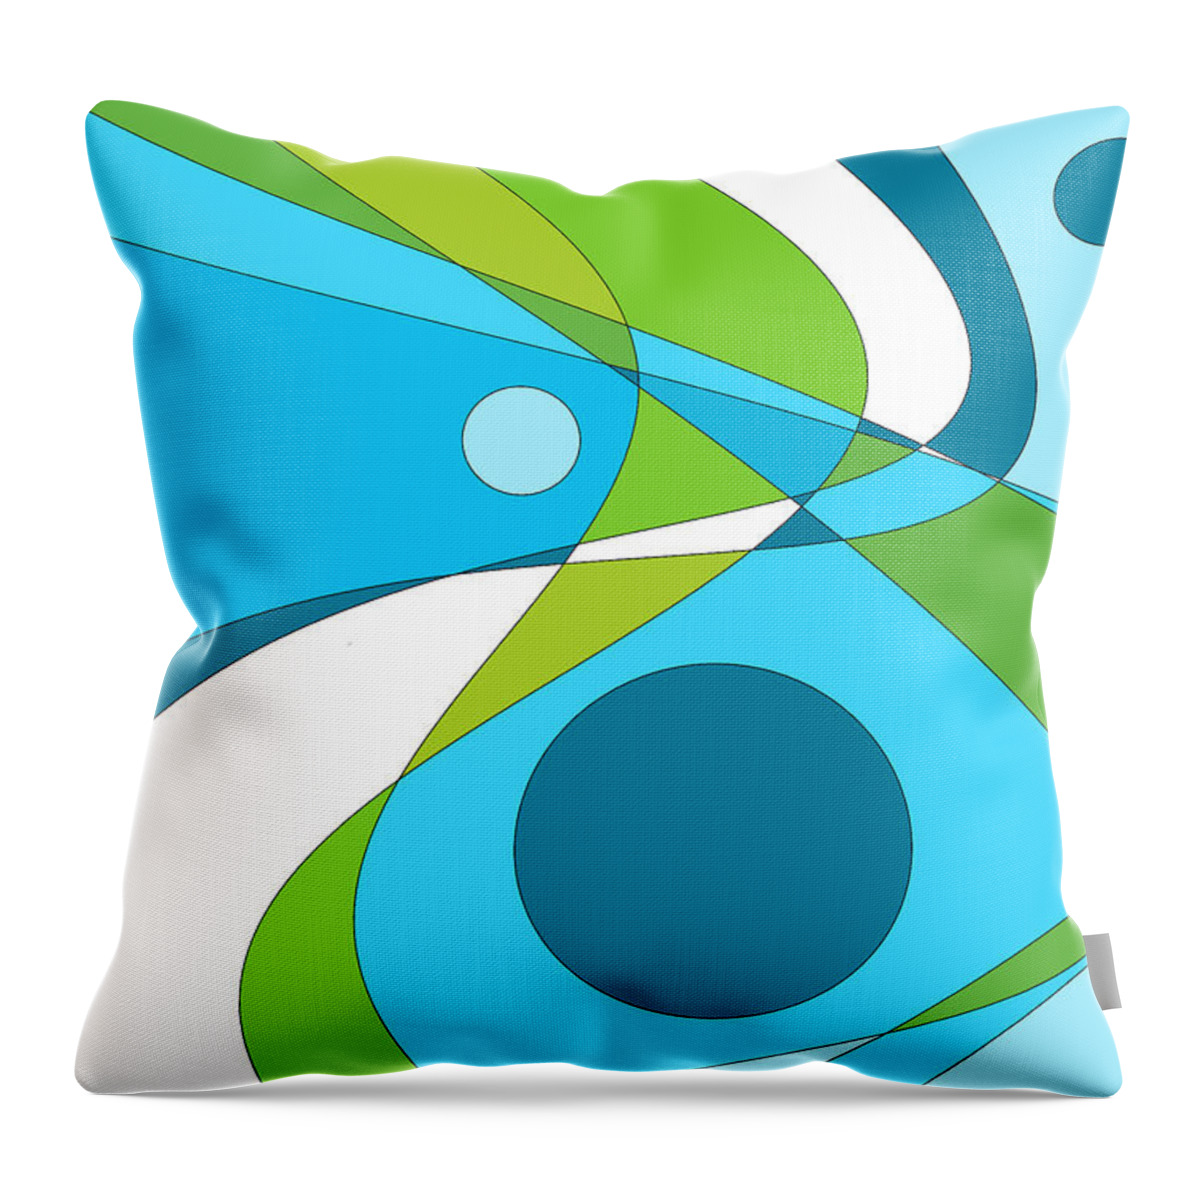 Ocean Breezes Throw Pillow featuring the digital art Ocean Breezes by Val Arie